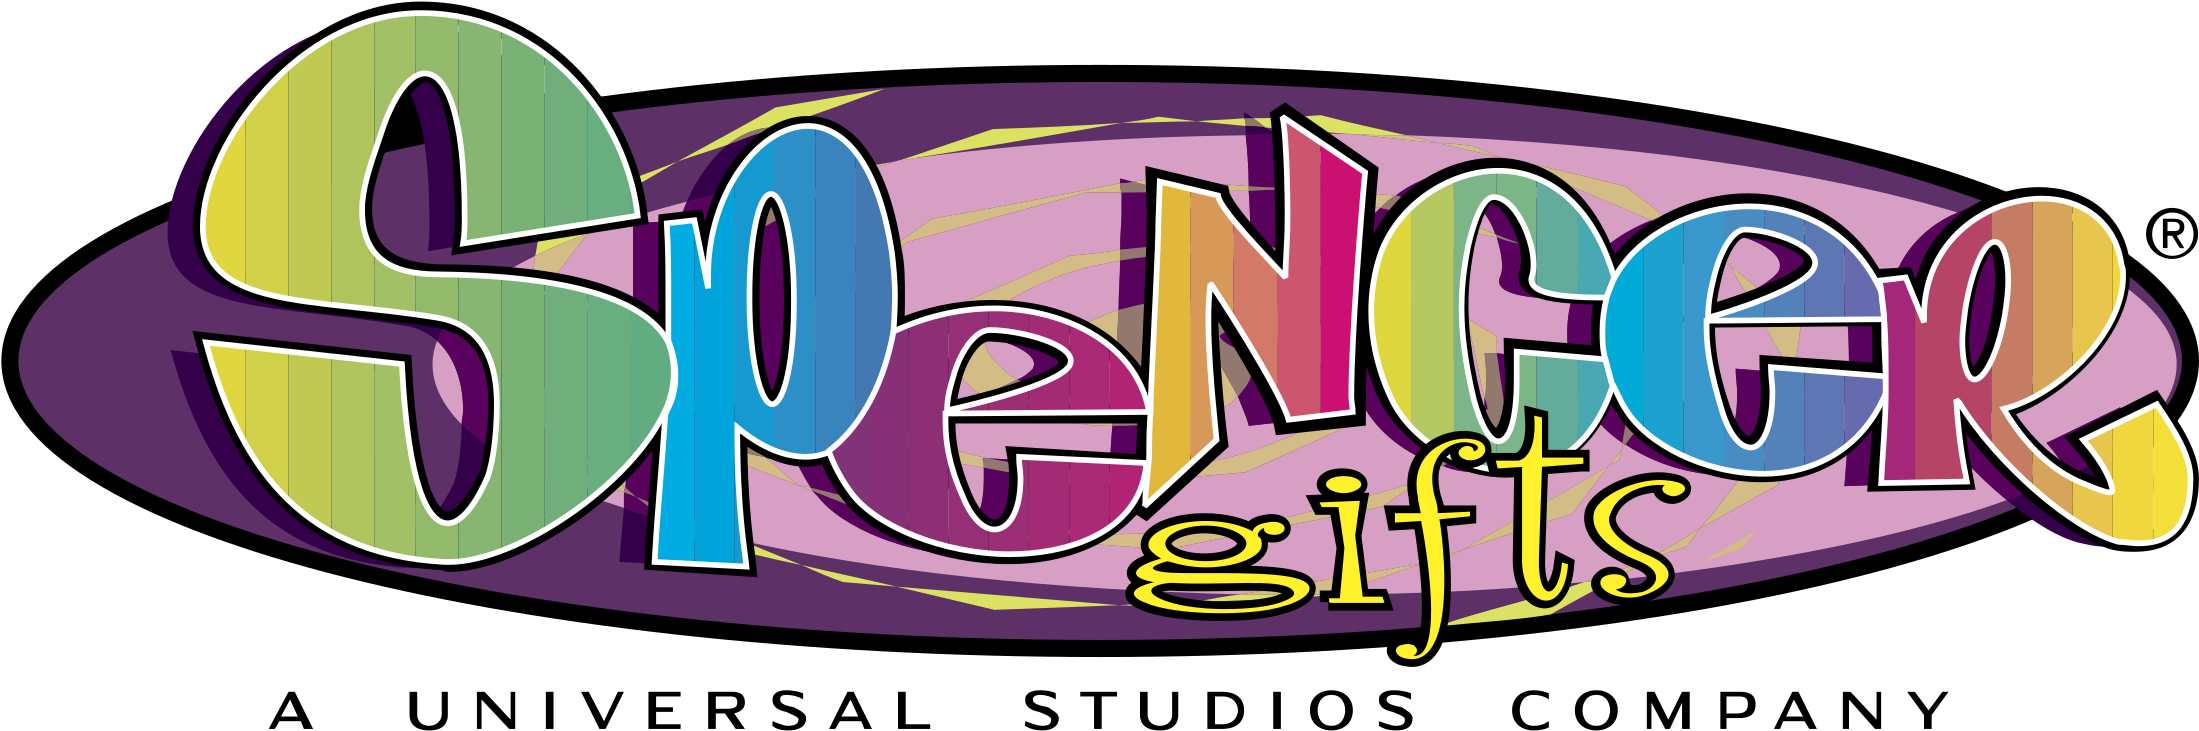 spencers-gift-logo